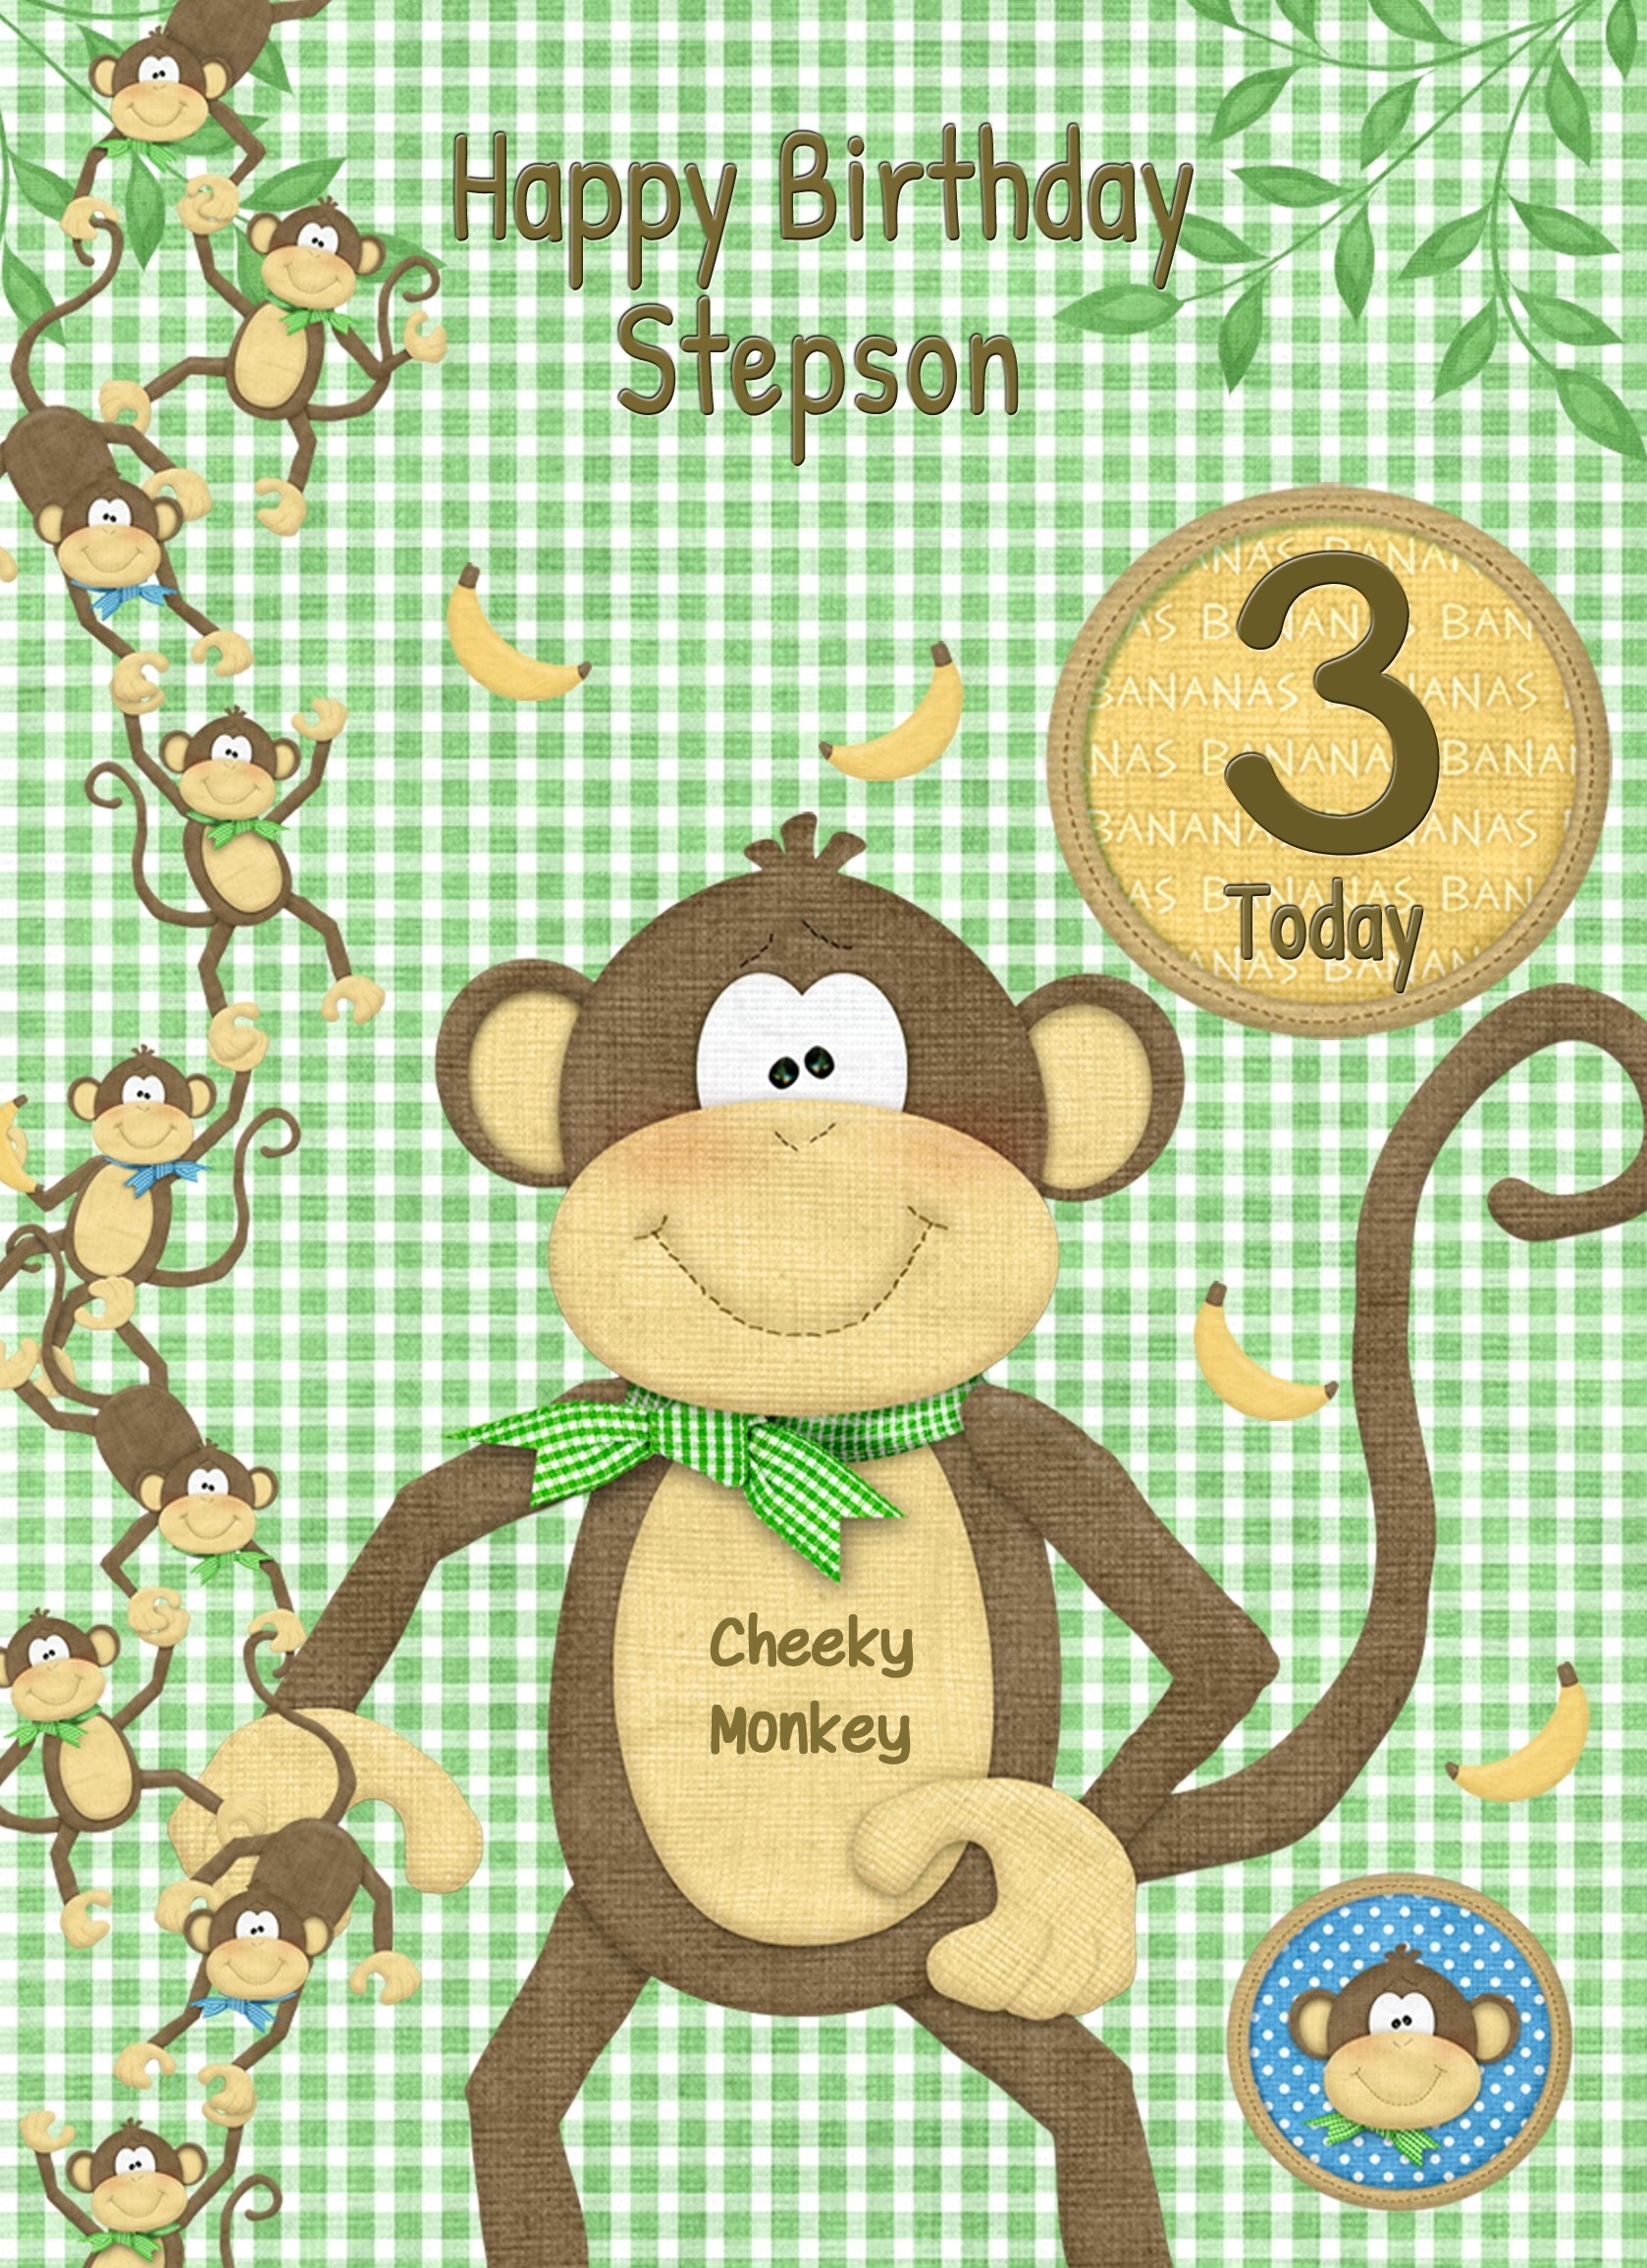 Kids 3rd Birthday Cheeky Monkey Cartoon Card for Stepson